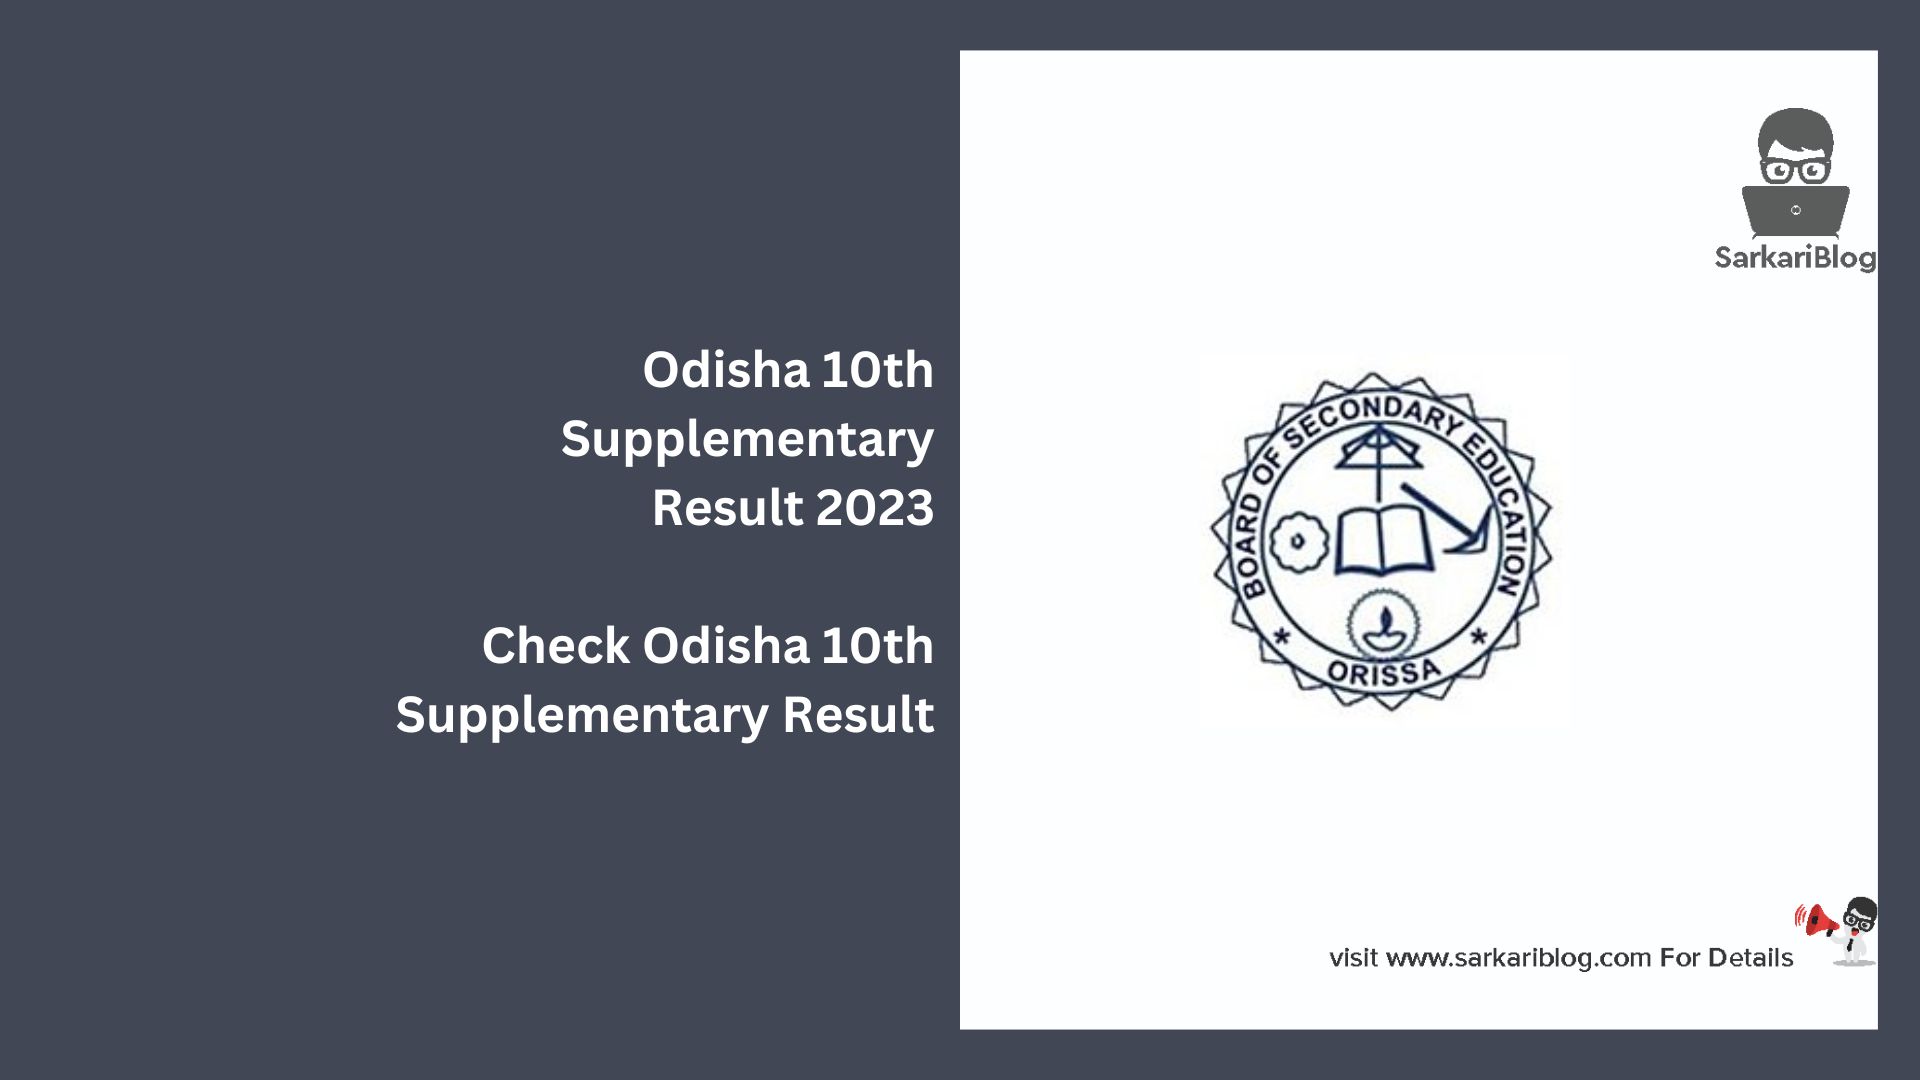 Odisha 10th Supplementary Result 2023